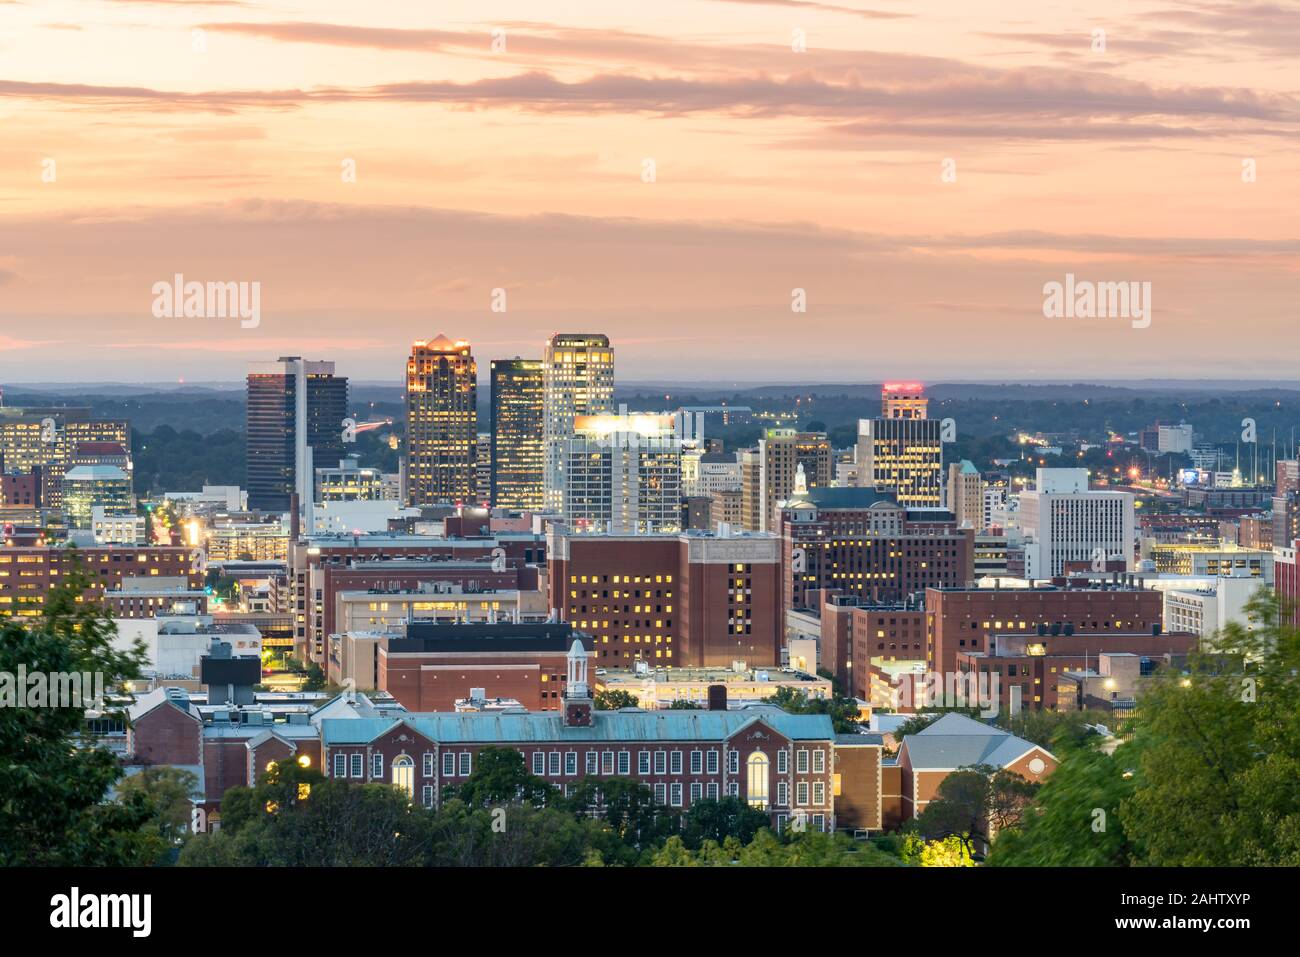 City skyline of Birmingham, Alabama at sunset Stock Photo